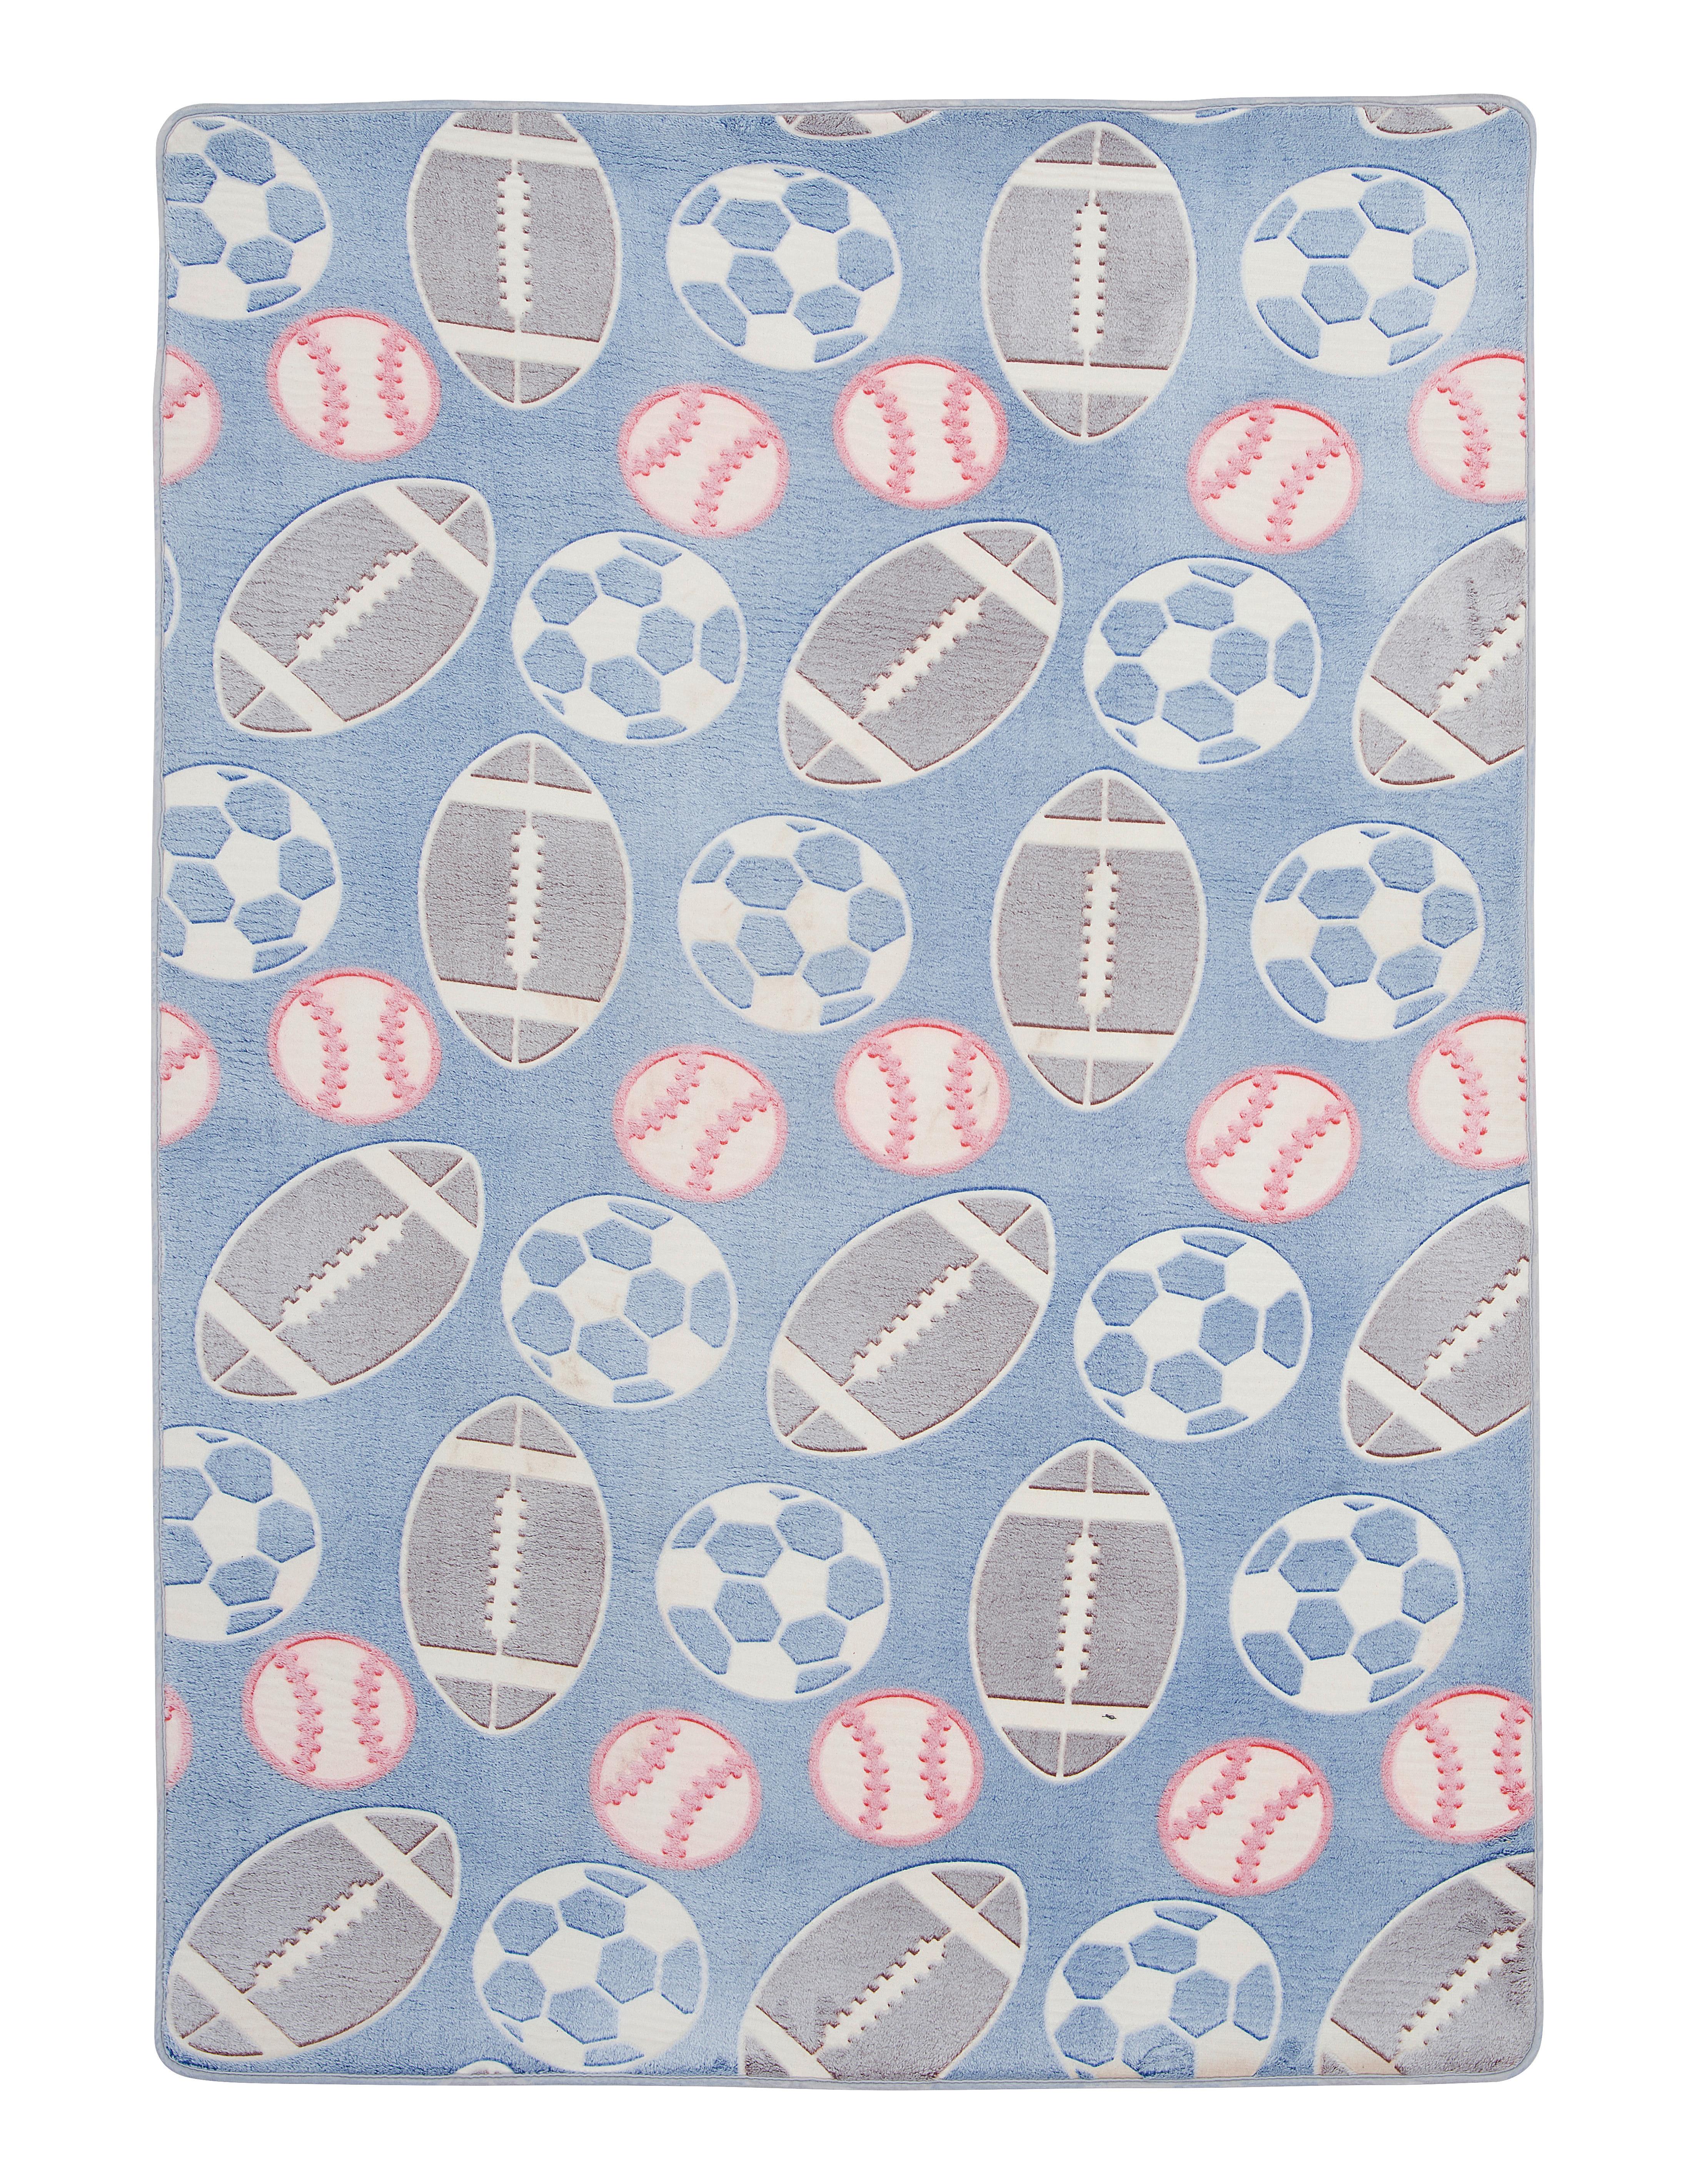 Kinderteppich Ball in Grau ca. 120x170cm - Grau, MODERN, Textil (120/170cm) - Modern Living